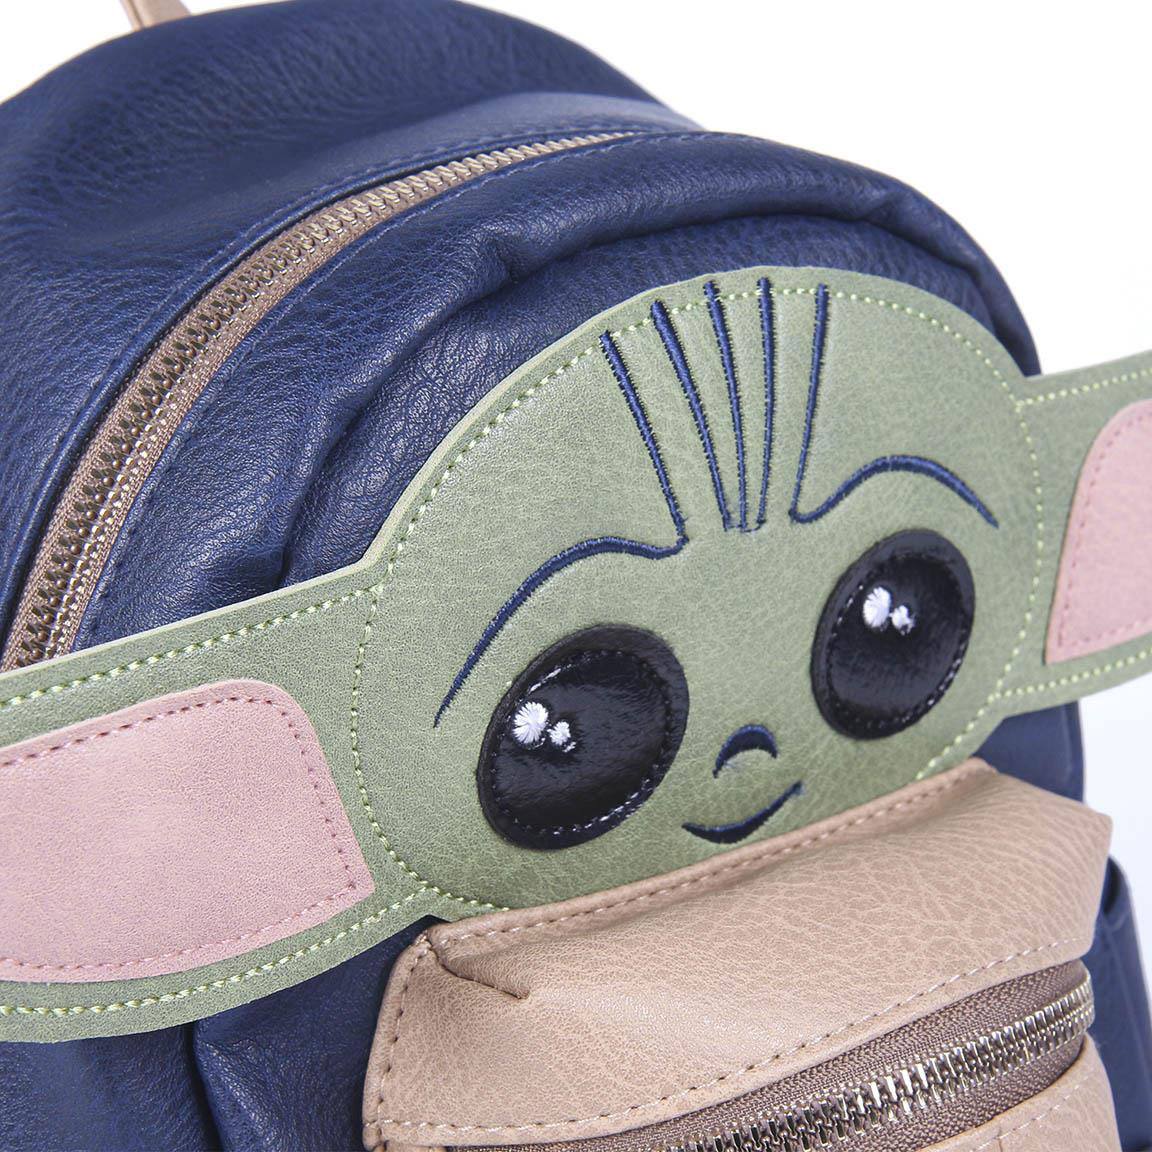 Star Wars the Mandalorian - Grogu backpack